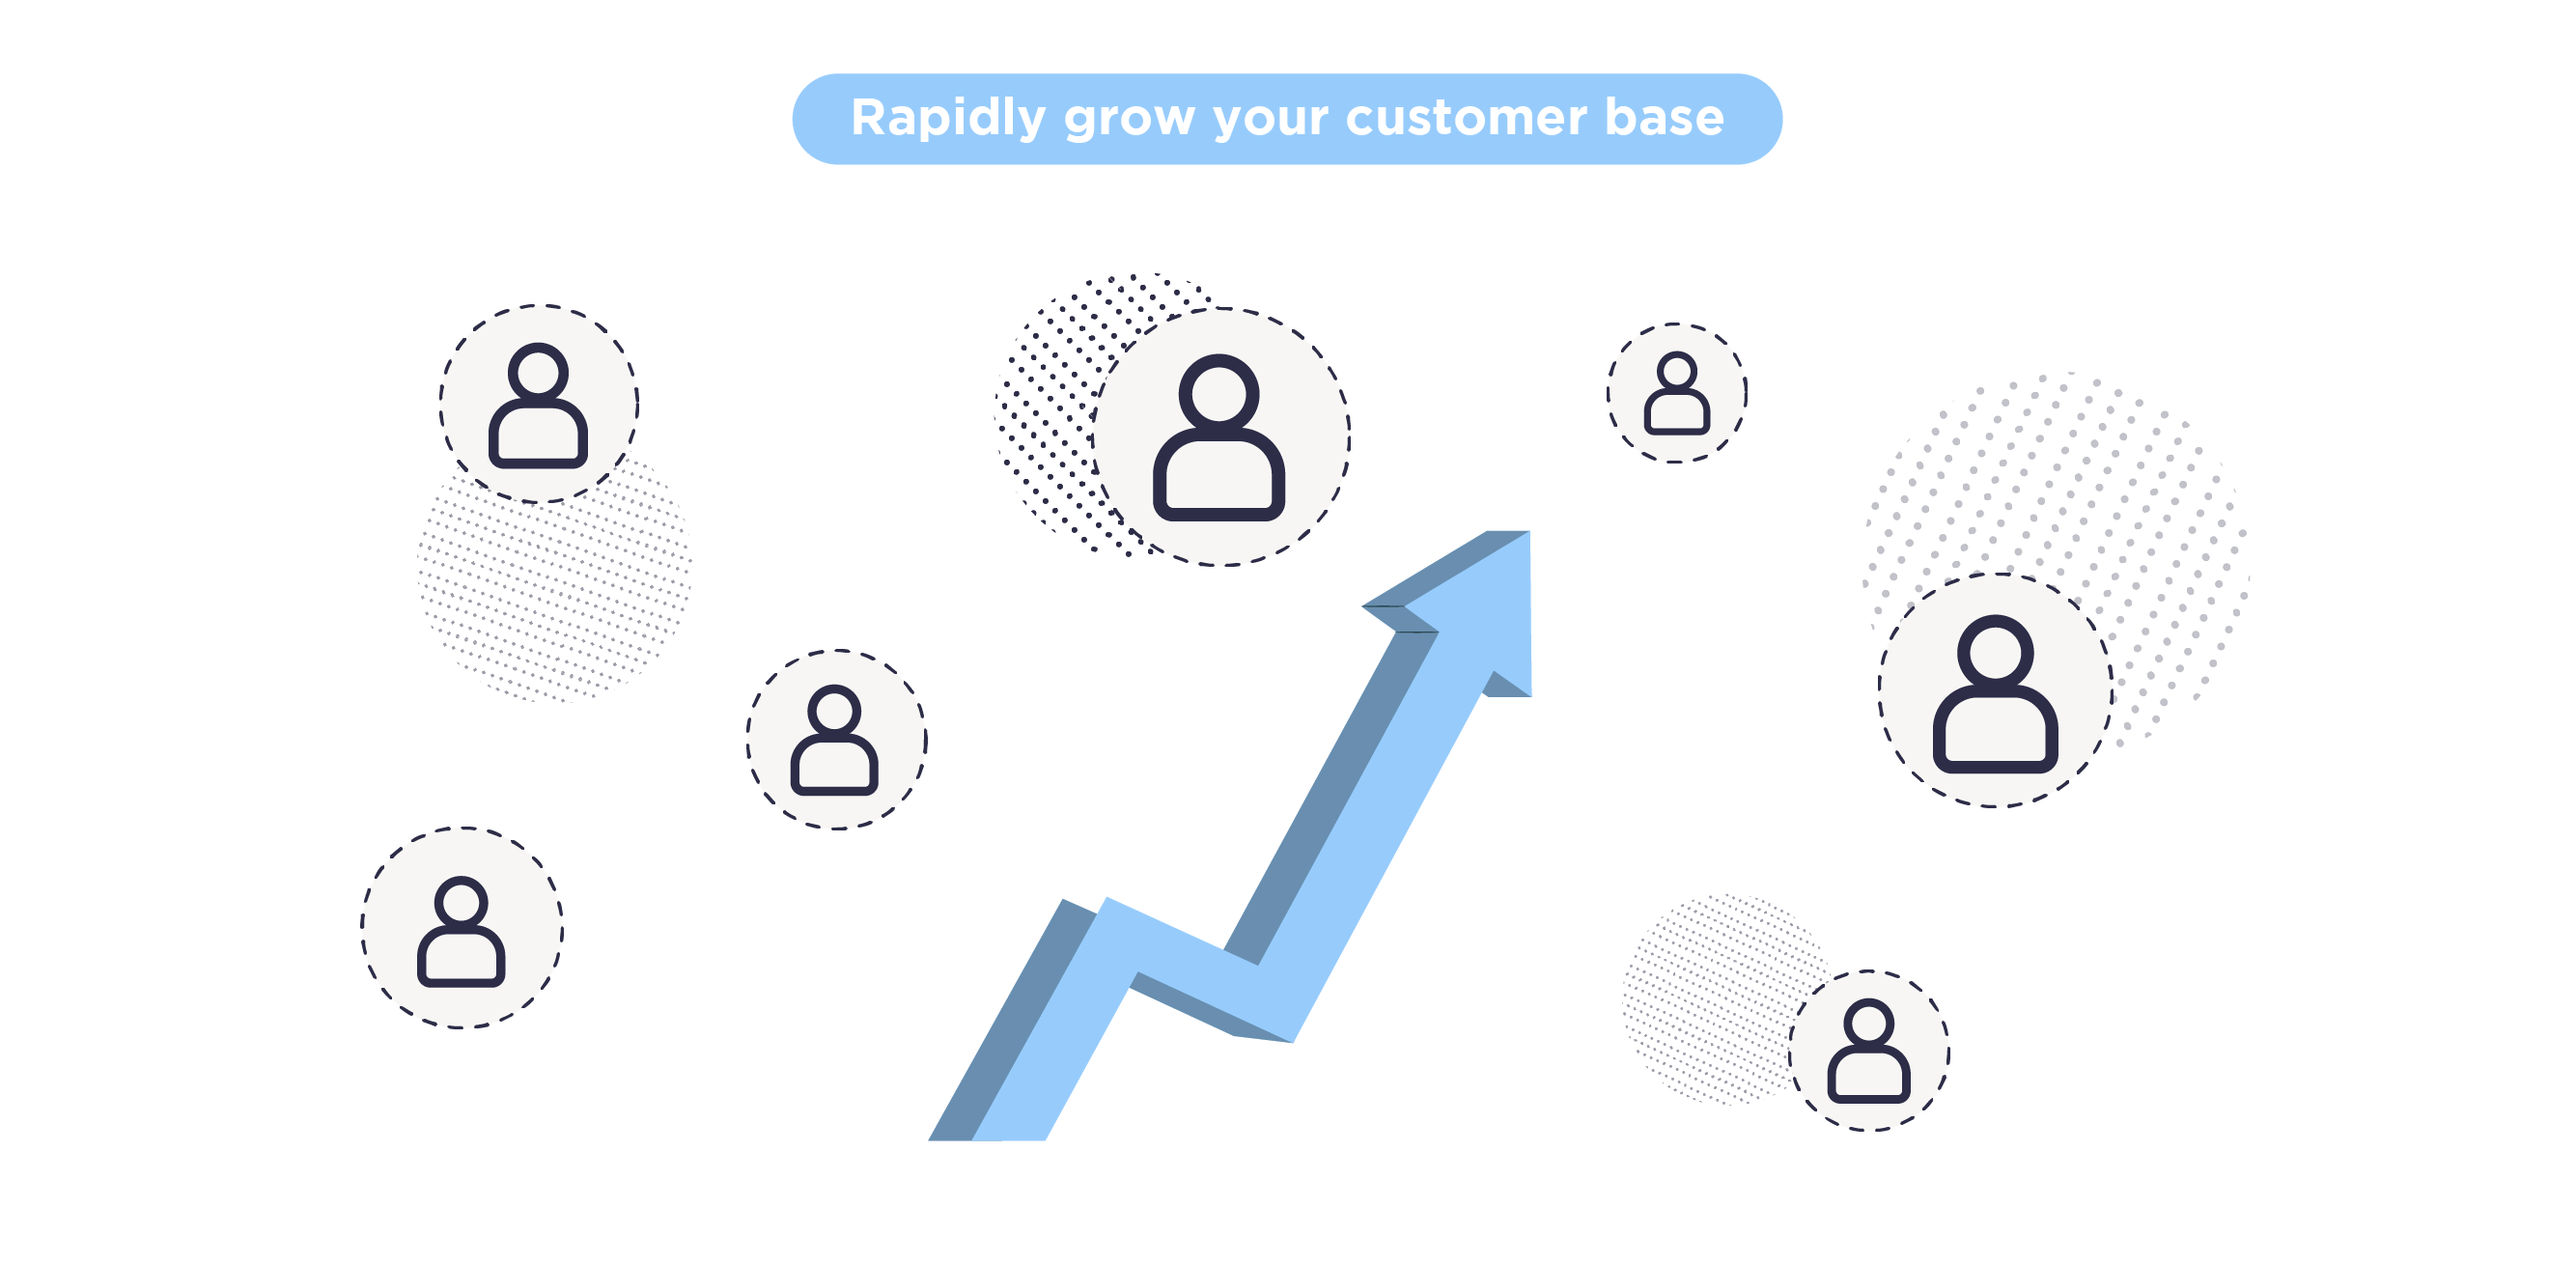 Rapidly grow your customer base